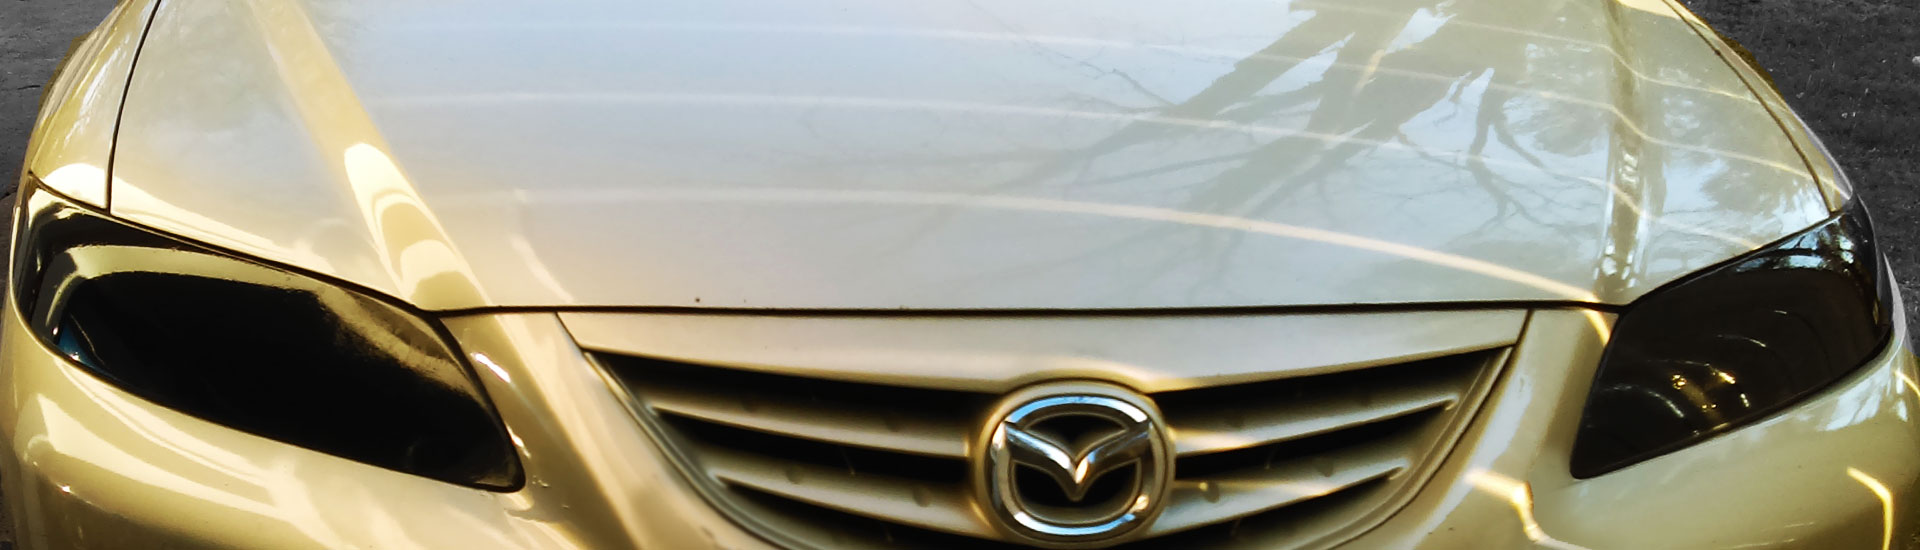 Mazda Mazda6 Headlight Tint Covers